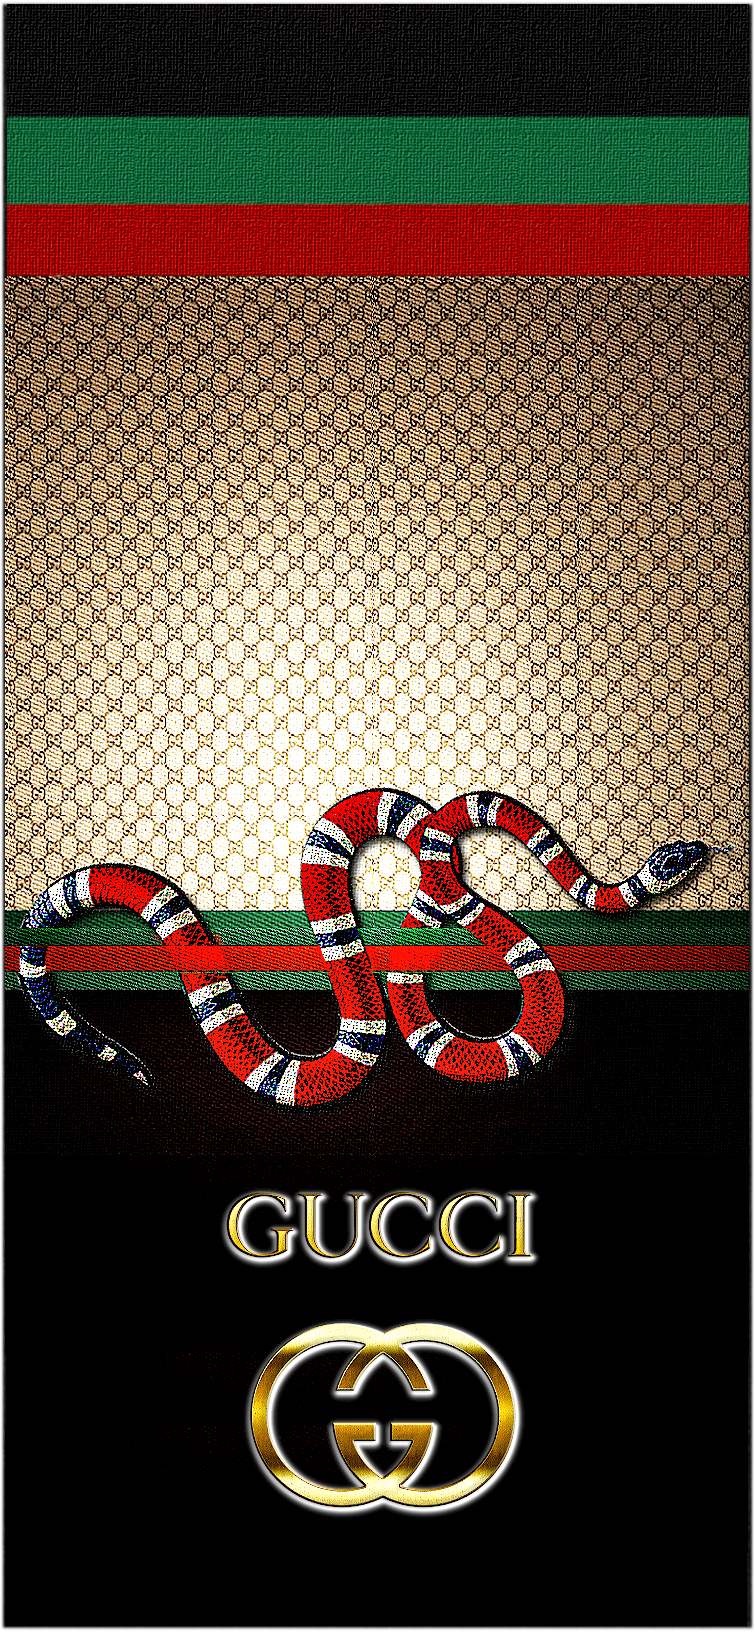 Gucci Slithering Snake iPhone Wallpaper J Farhat by JFarhat on DeviantArt